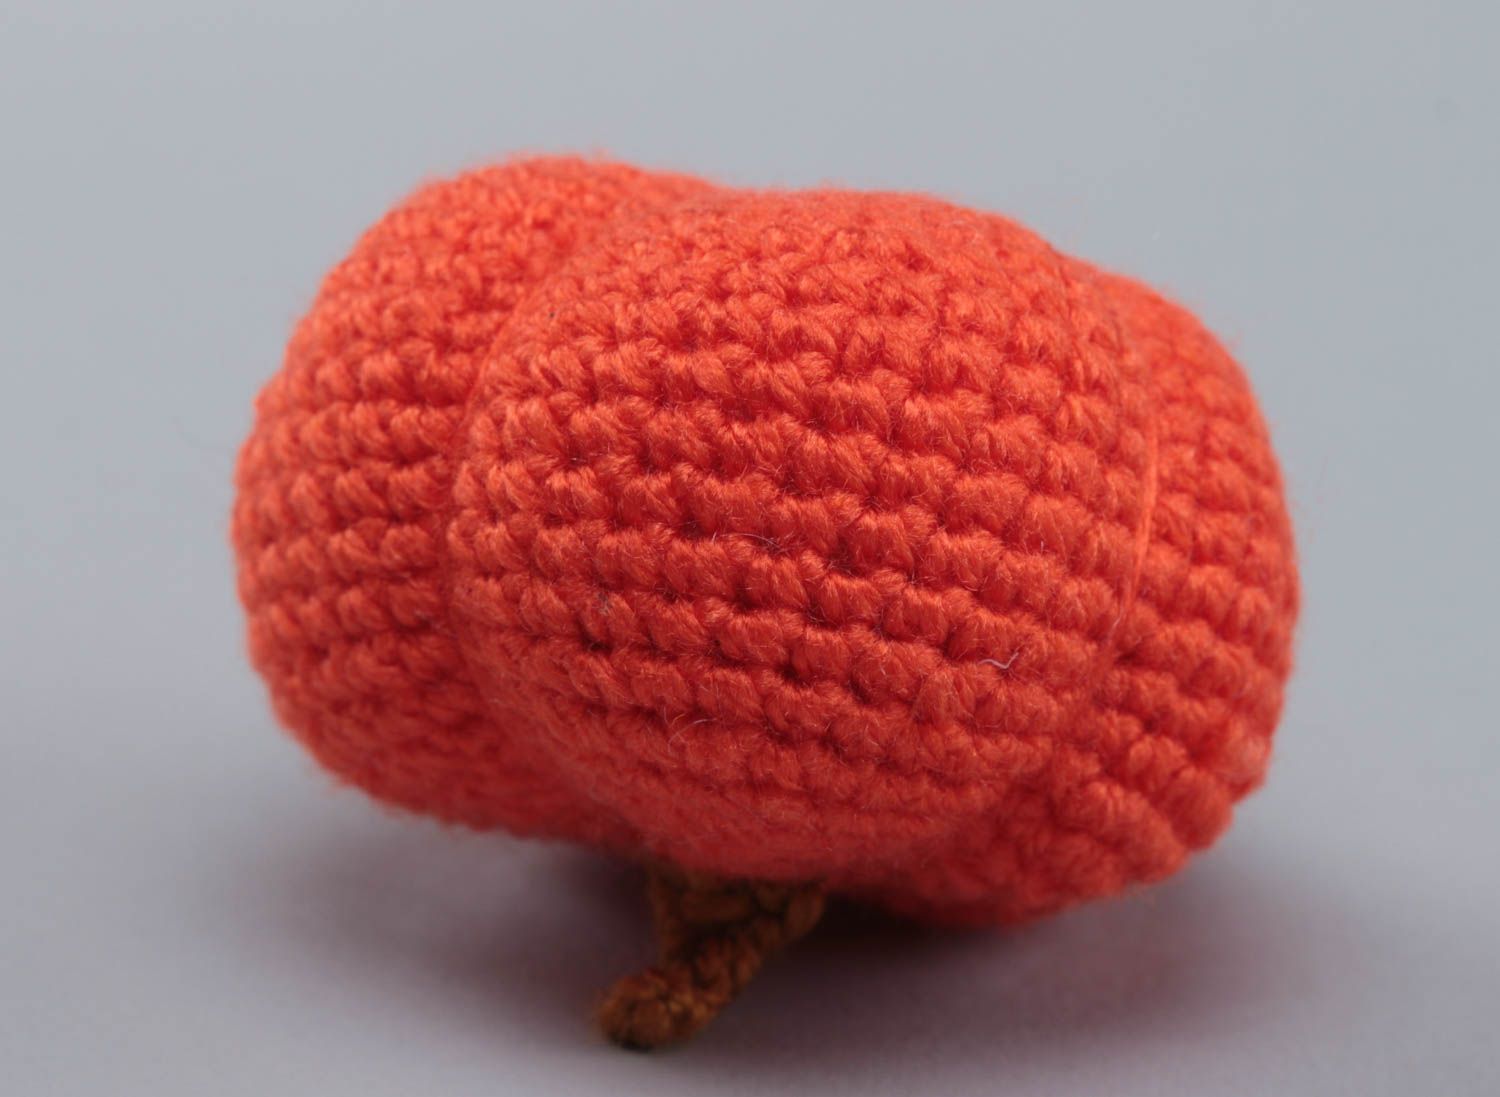 Handmade small crochet soft toy orange pumpkin for kids and interior decor photo 4